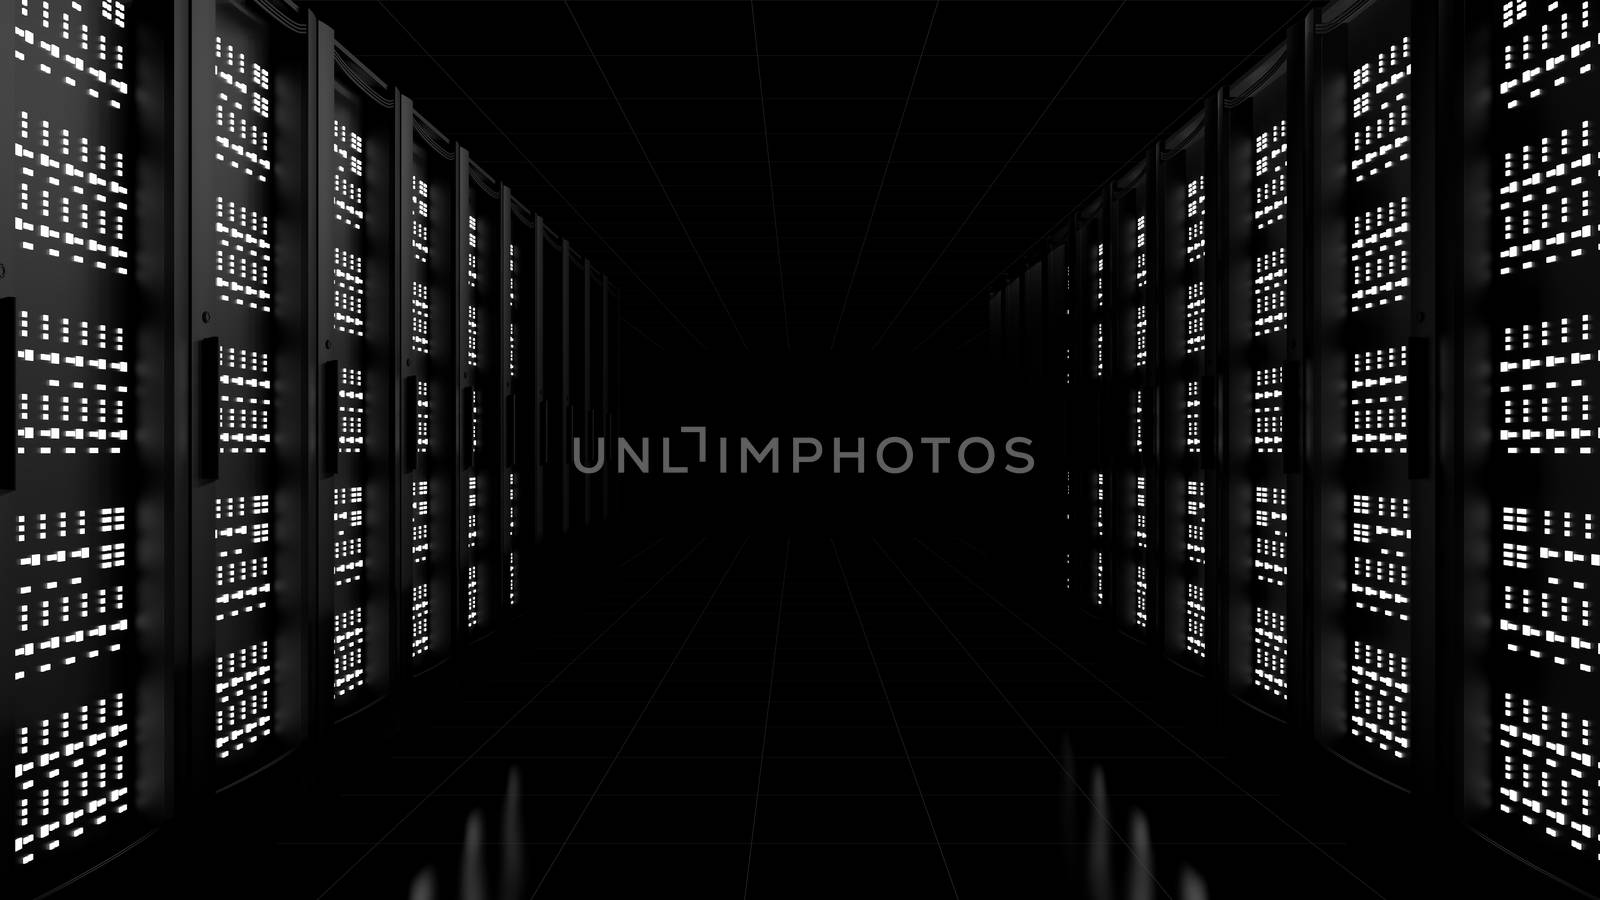 Network workstation servers on dark background by cherezoff